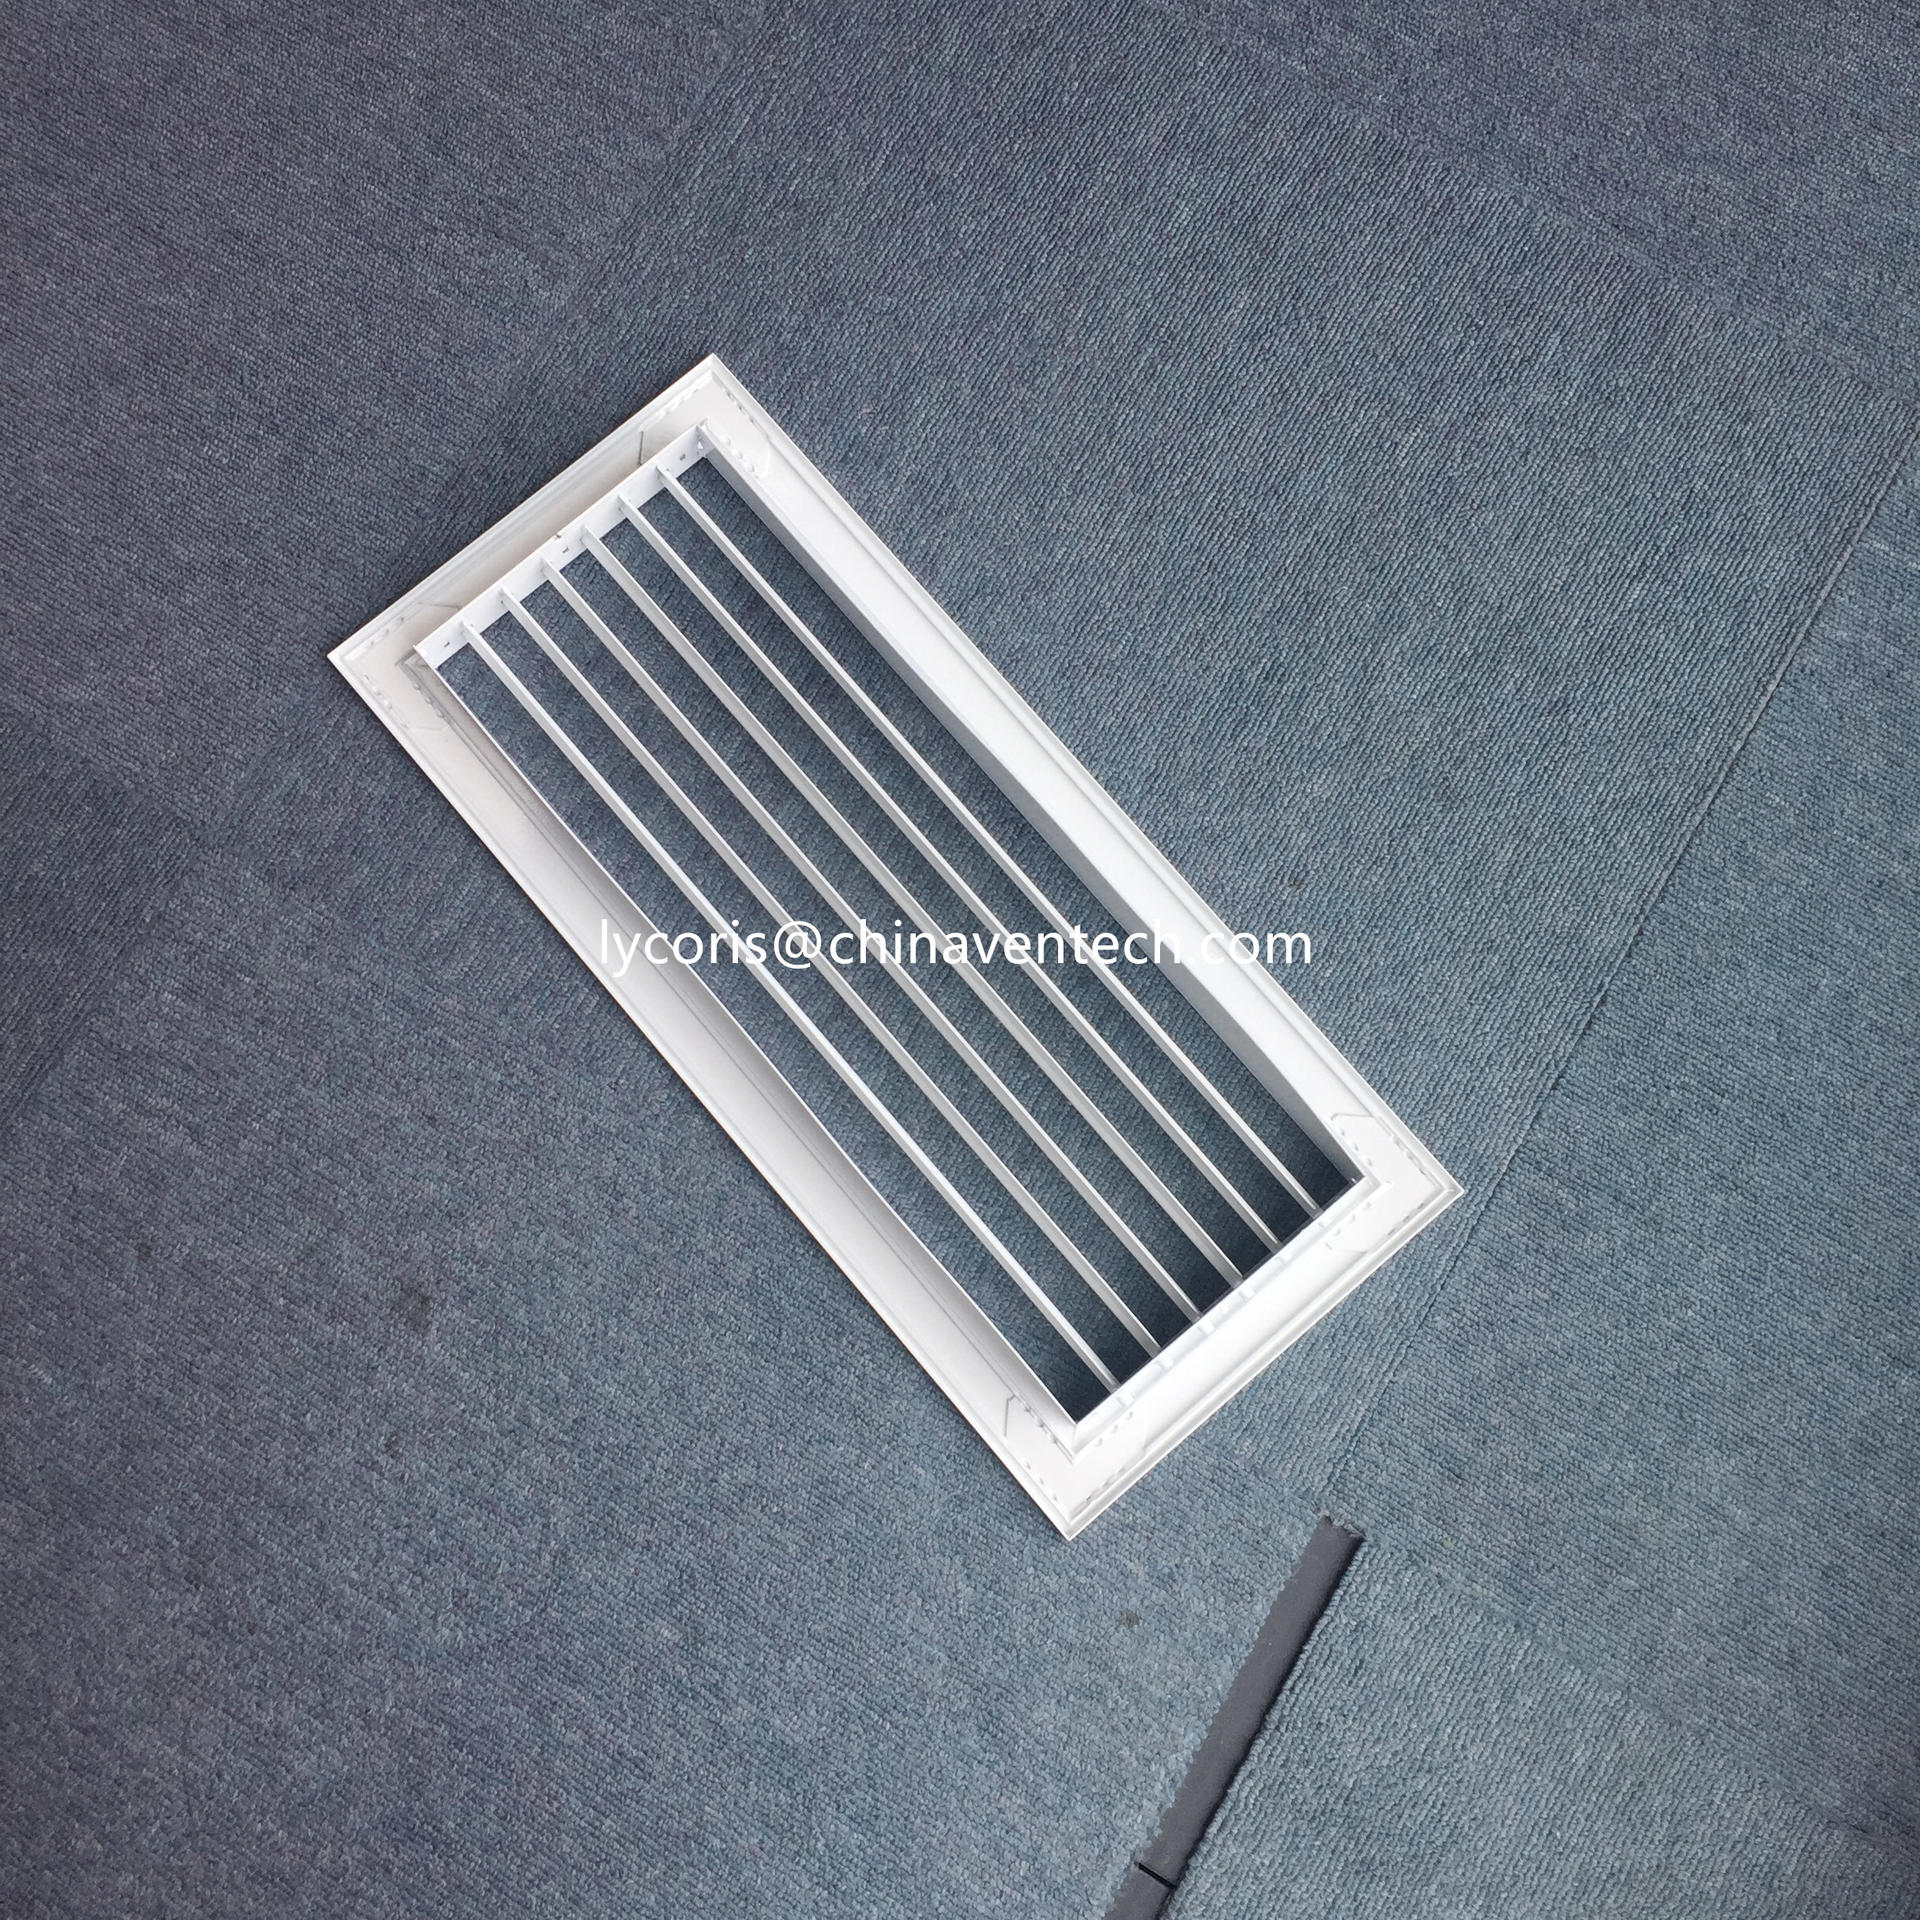 hvac ceiling air grille aluminum return single deflection grille